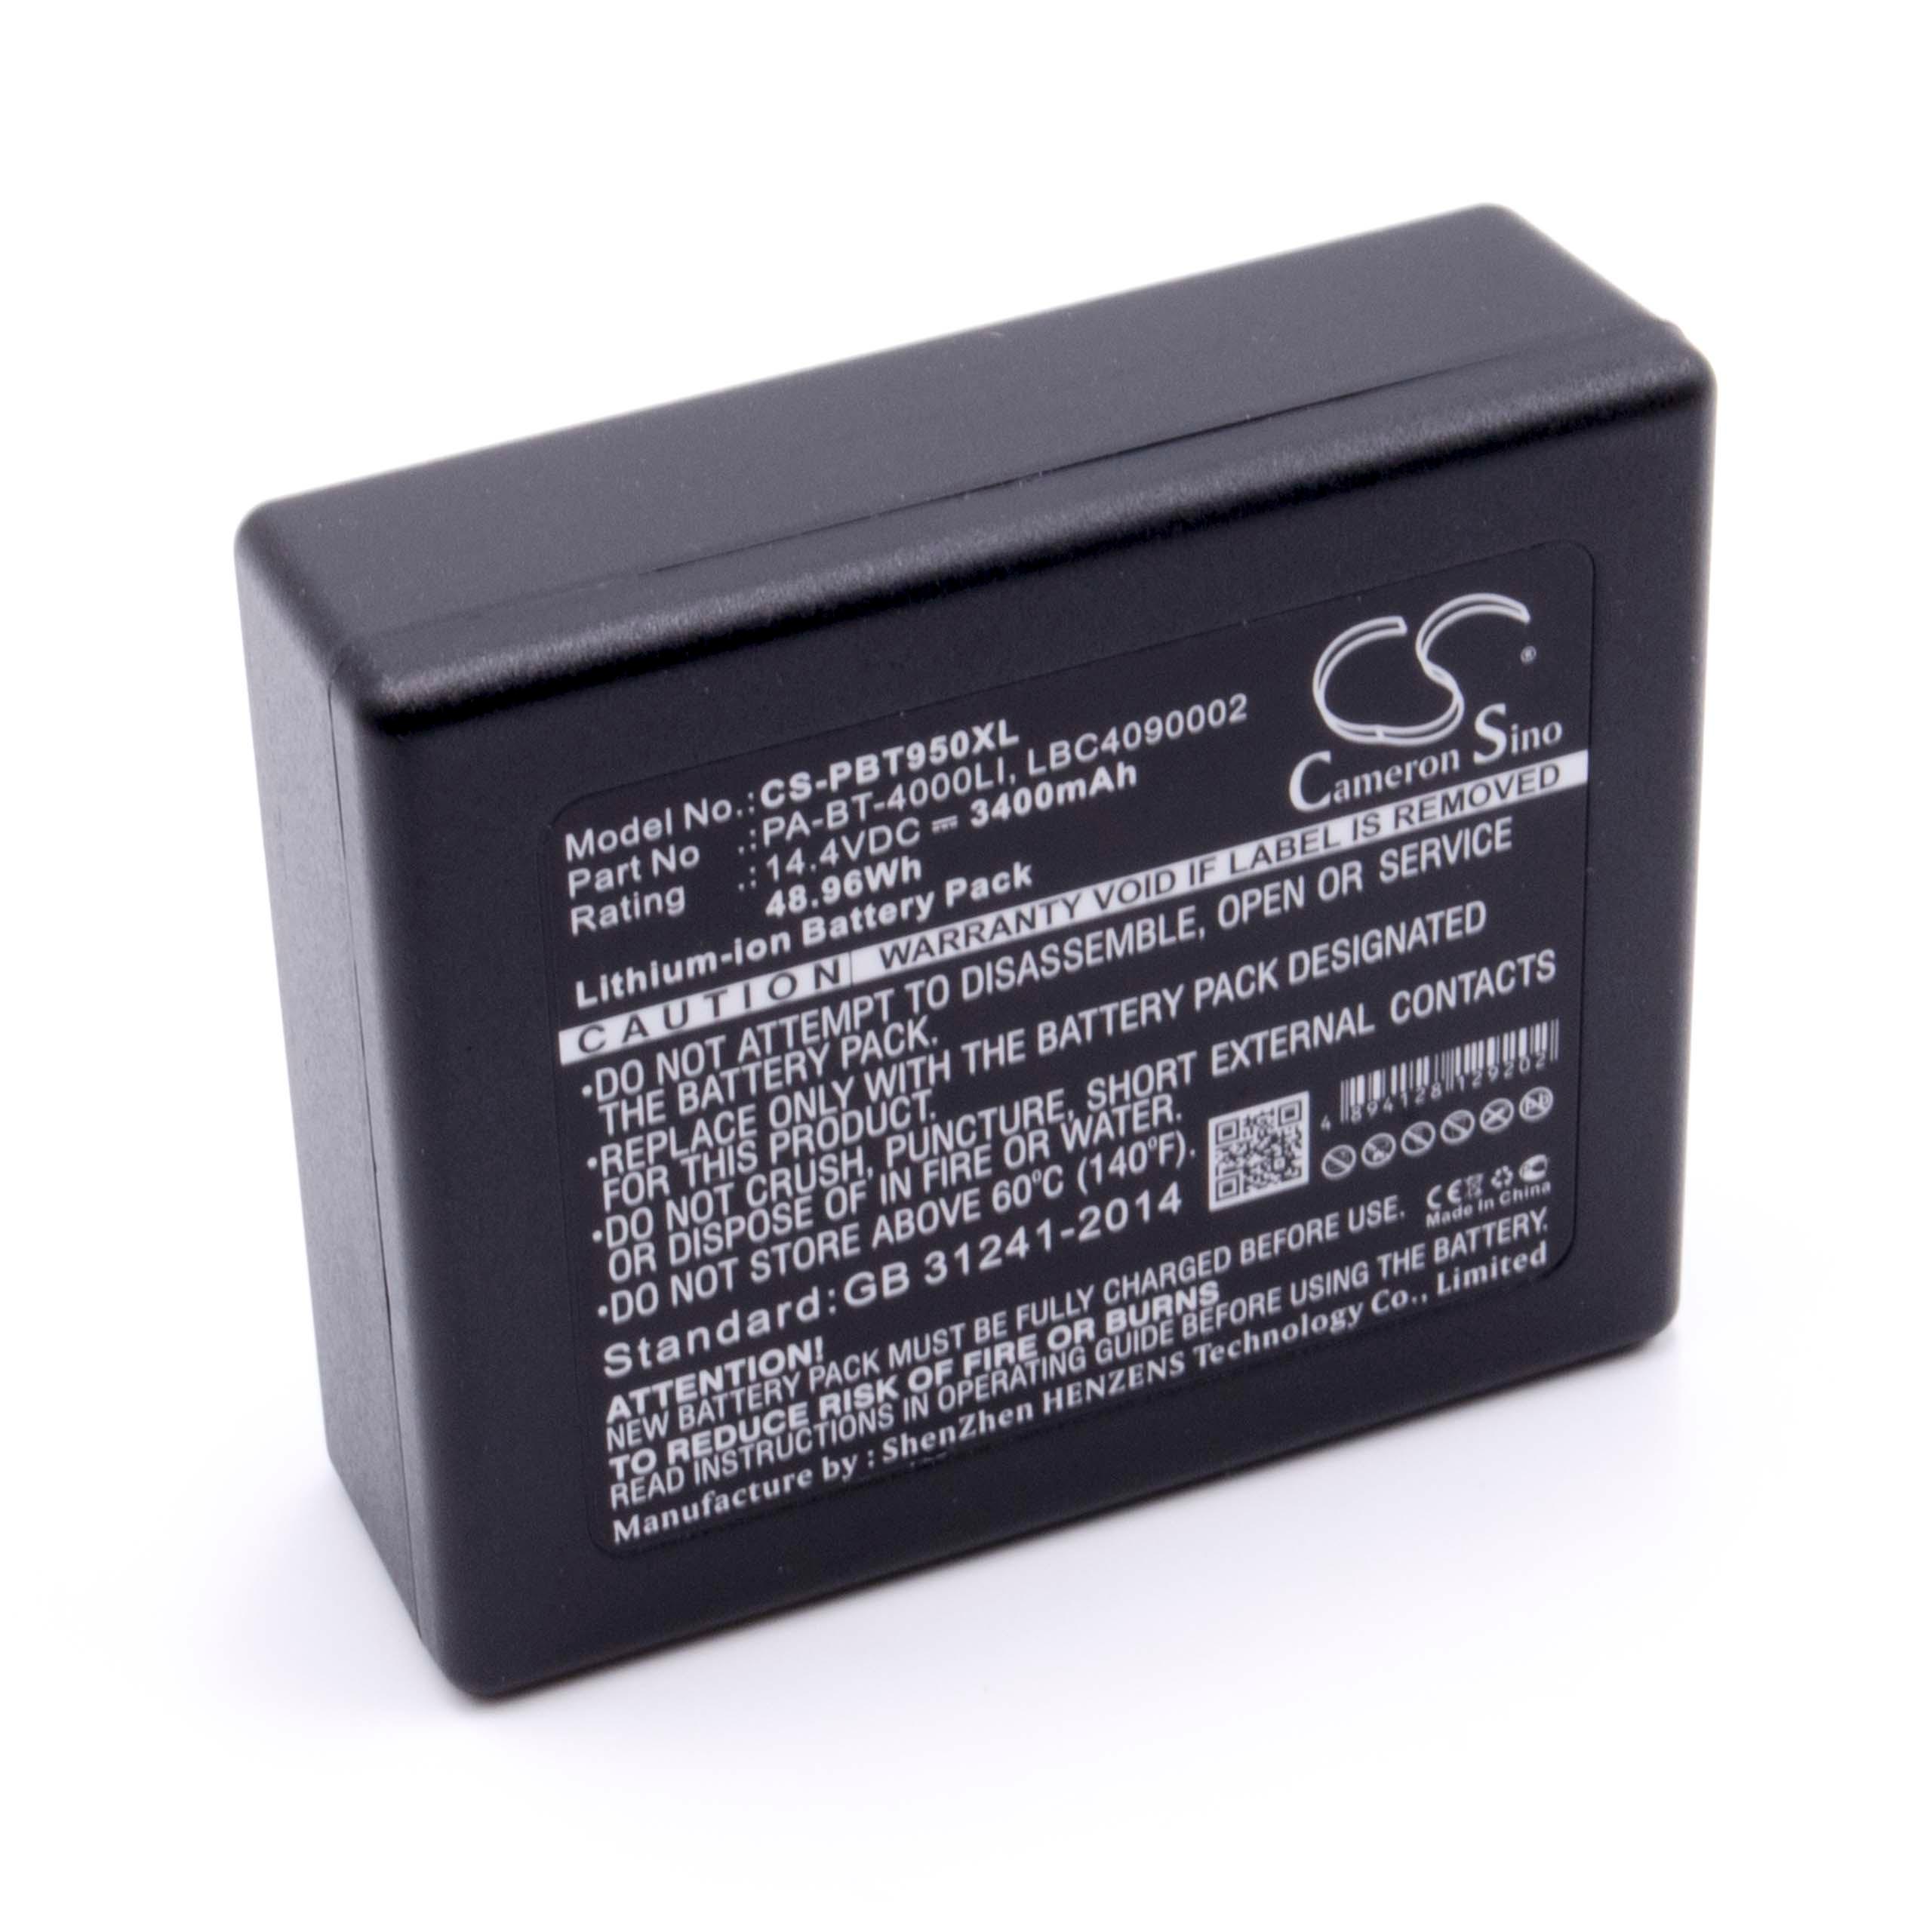 Batteria per stampante sostituisce Brother LBD709-001, HP25B, LBC4090002 Brother - 3400mAh 14,4V Li-Ion